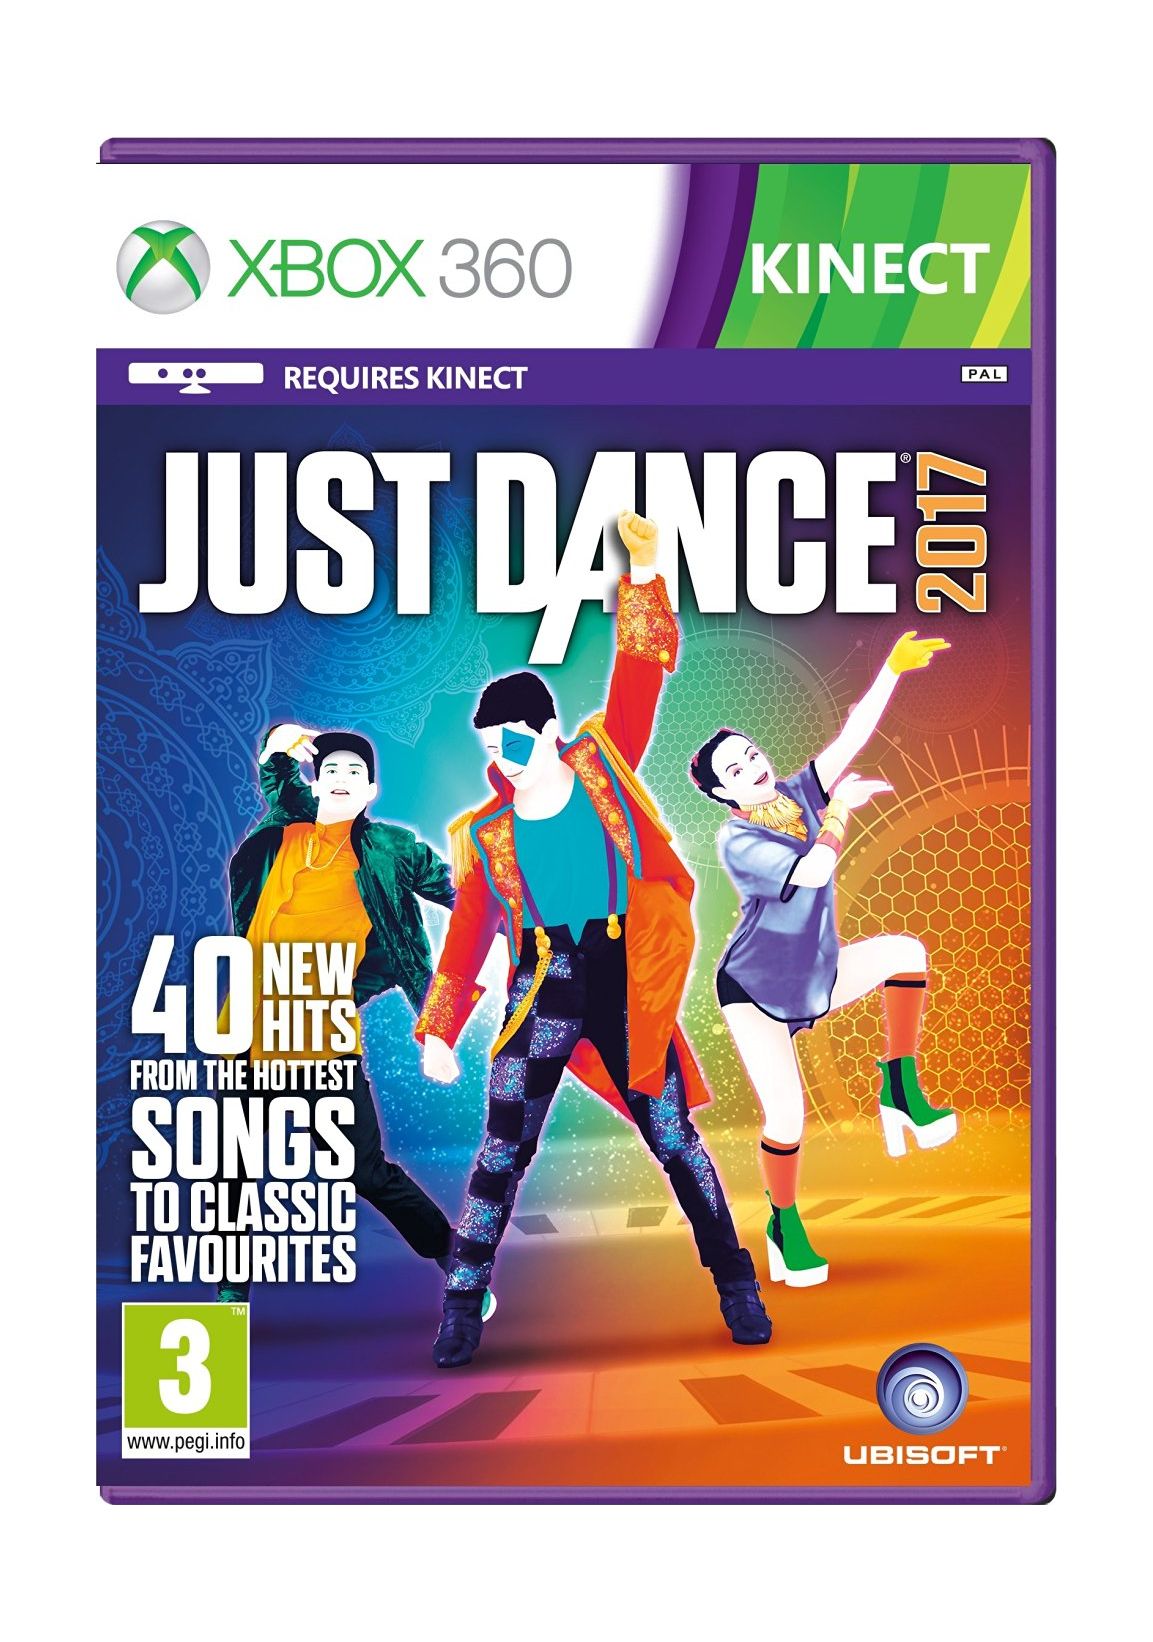 download just dance 4 xbox 360